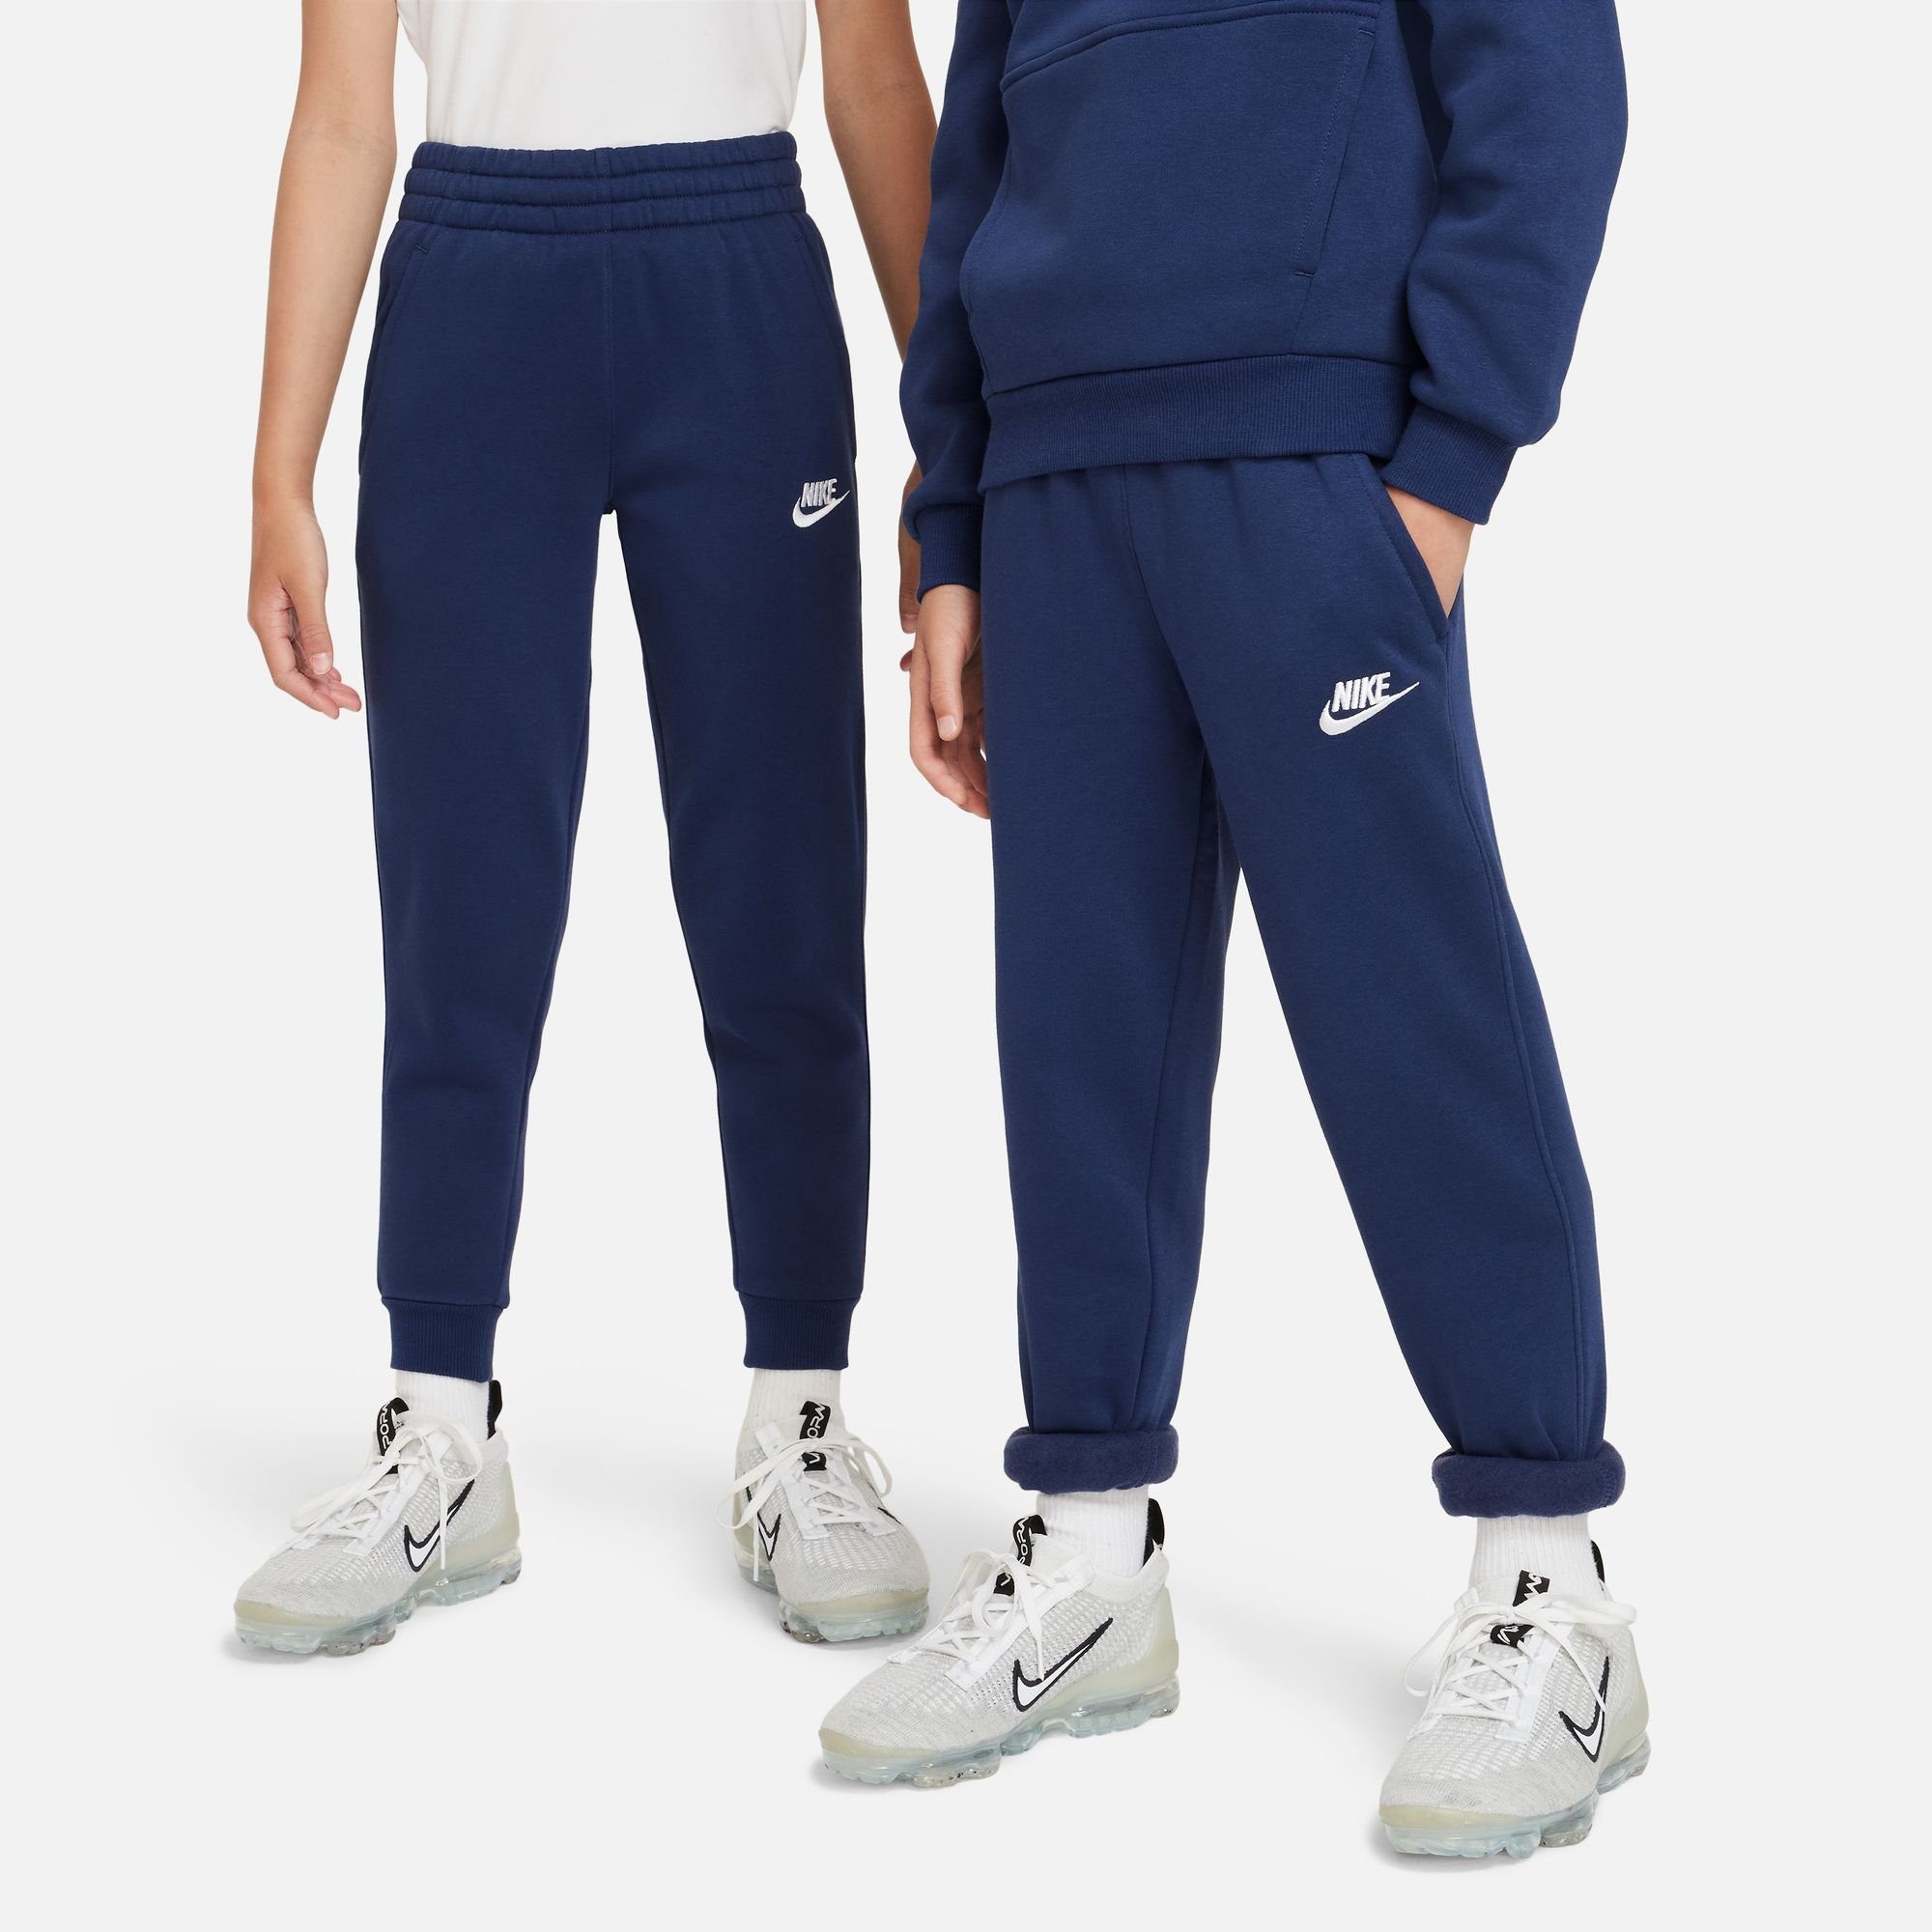 BIG Sportswear Nike MIDNIGHT CLUB KIDS' FLEECE Jogginghose NAVY/WHITE PANTS JOGGER